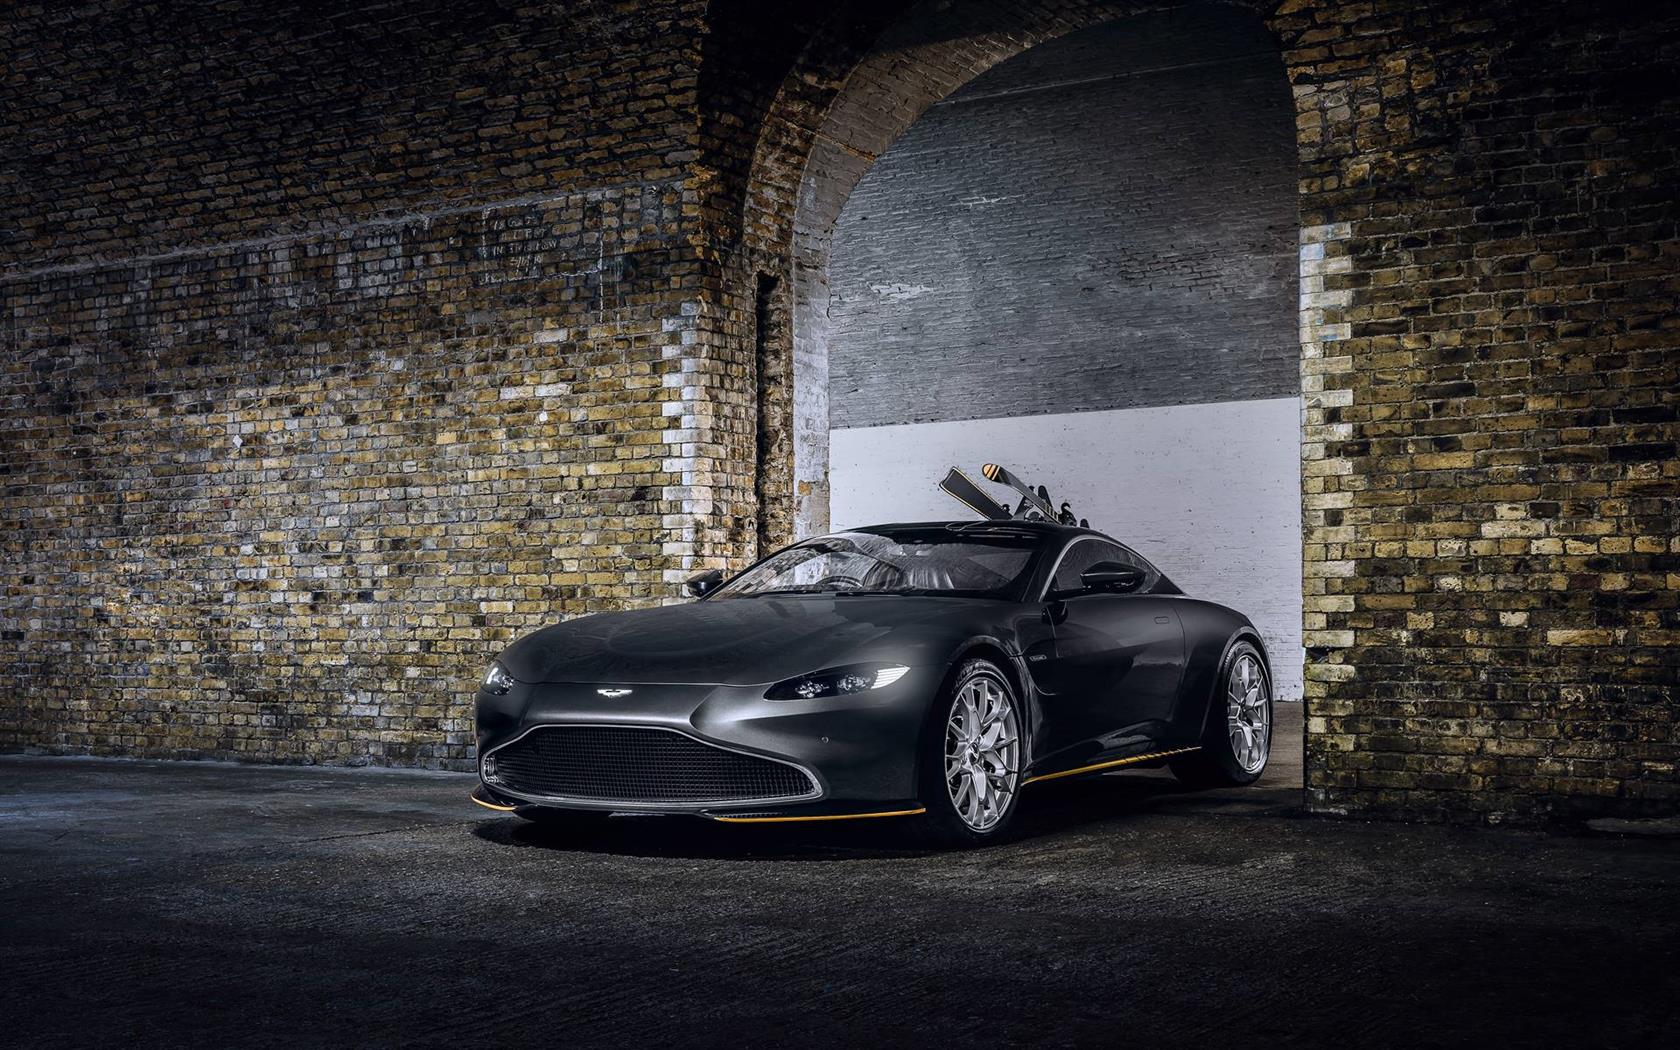 2020 Aston Martin DBS Superleggera 007 Edition